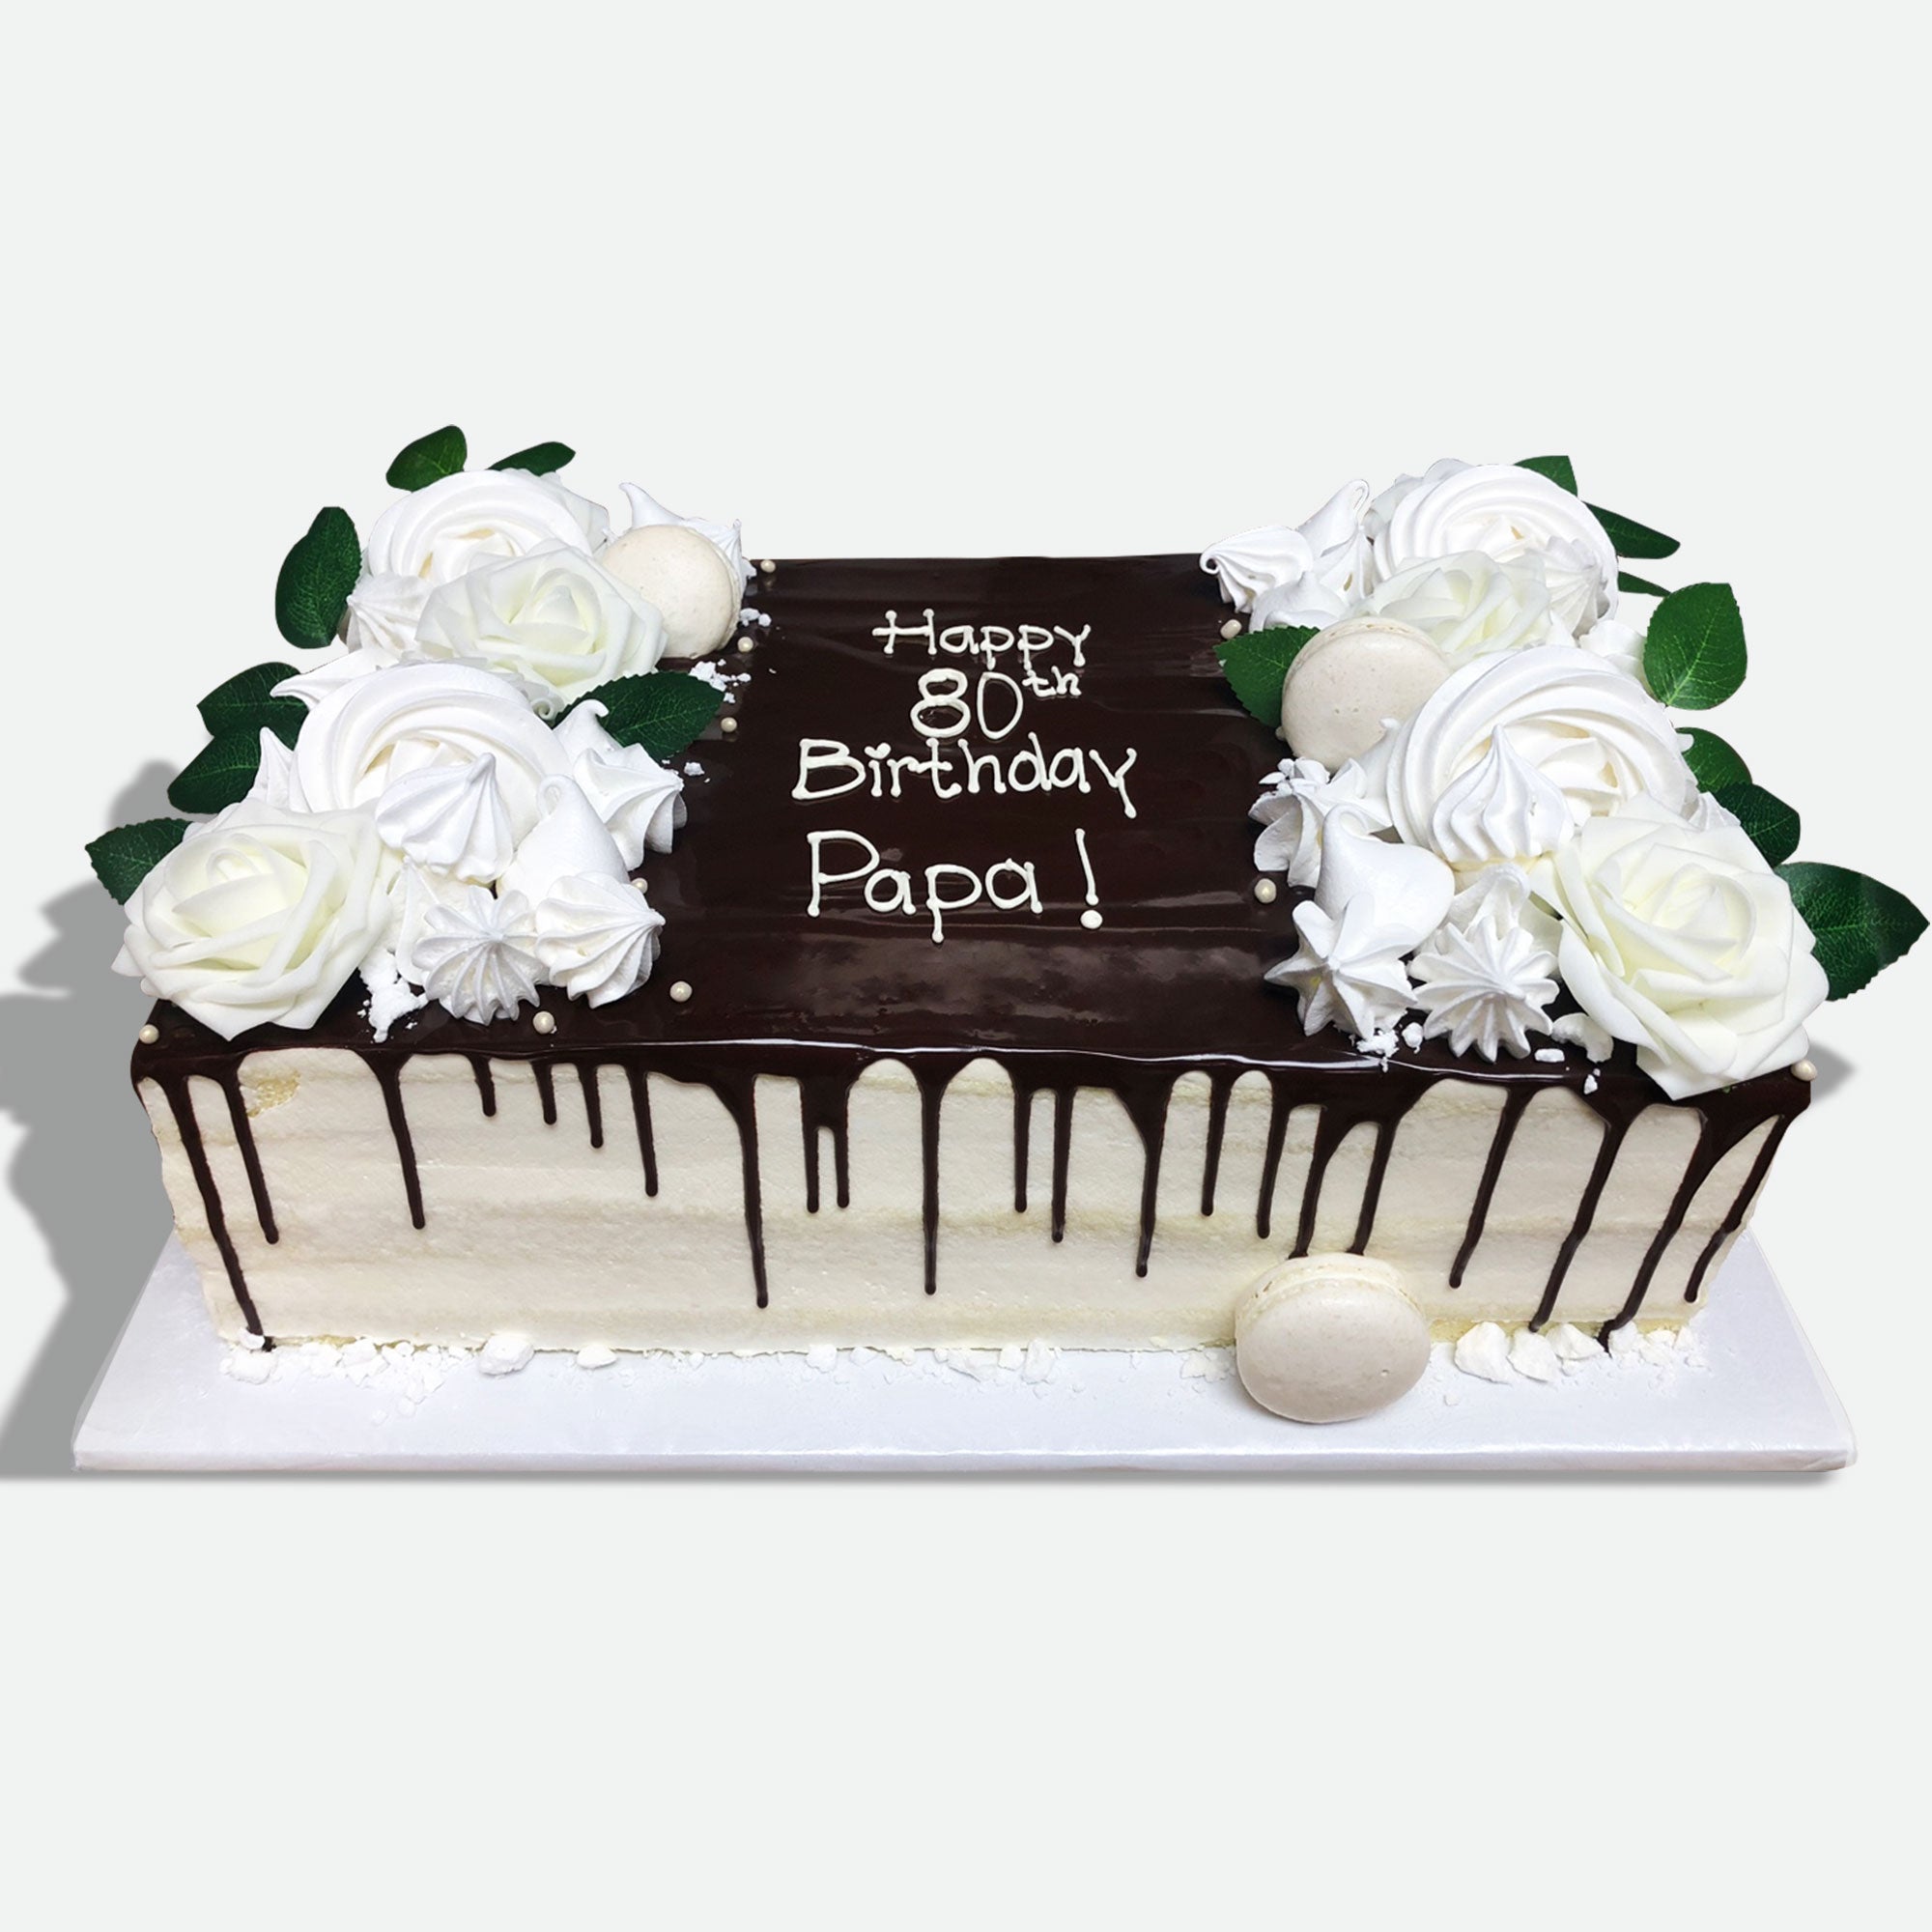 Best Papa Chocolate Photo Cake